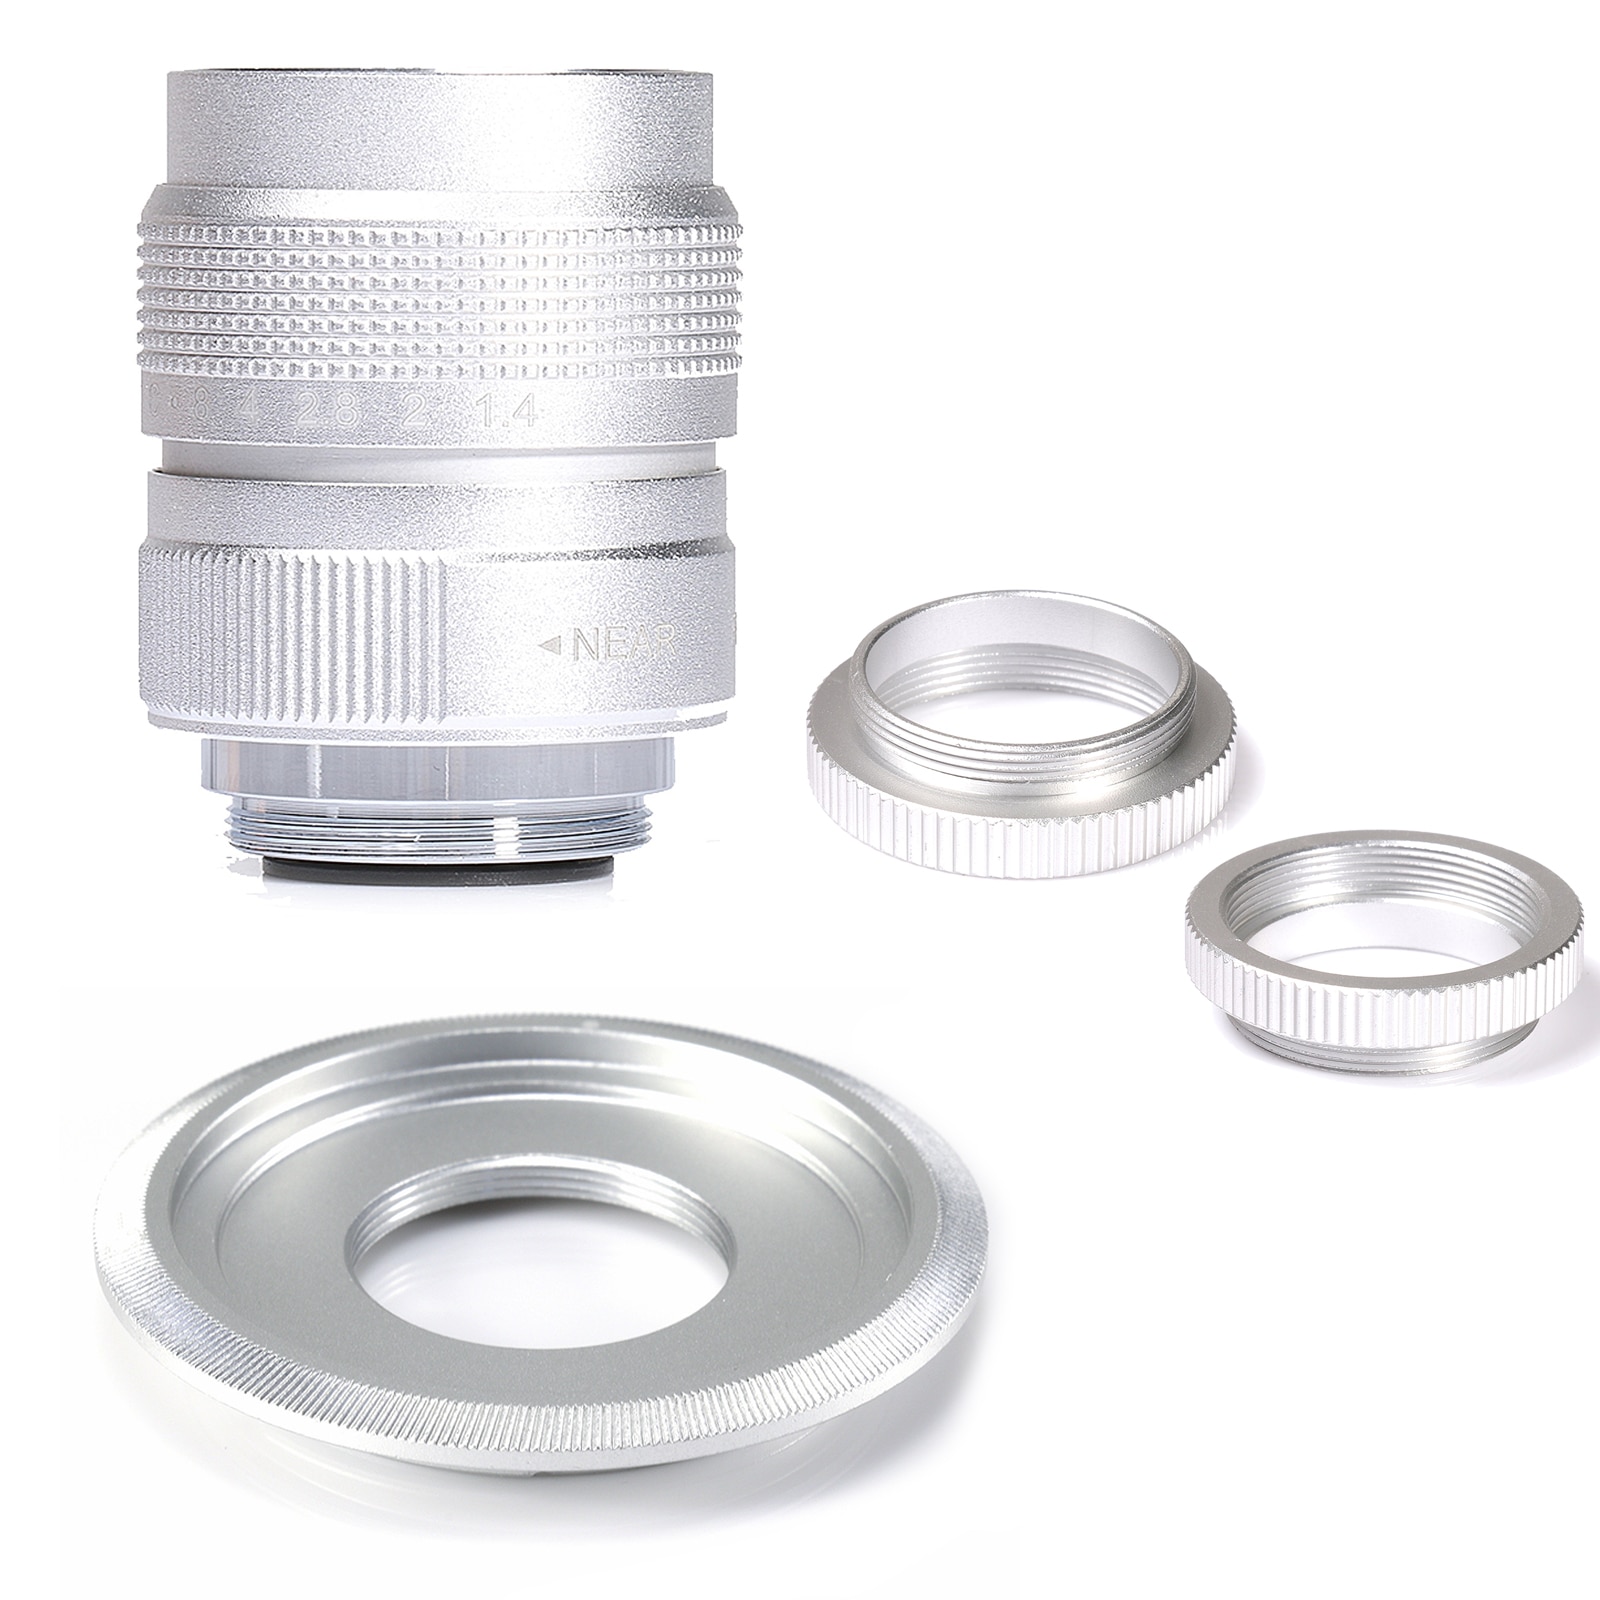 Zilver Fujian 25Mm F/1.4 APS-C Cctv Lens + Adapter Ring + 2 Macro Ring Voor Sony Nex mirroless Camera A5300/A6000/A6300/A7/A7II/A9